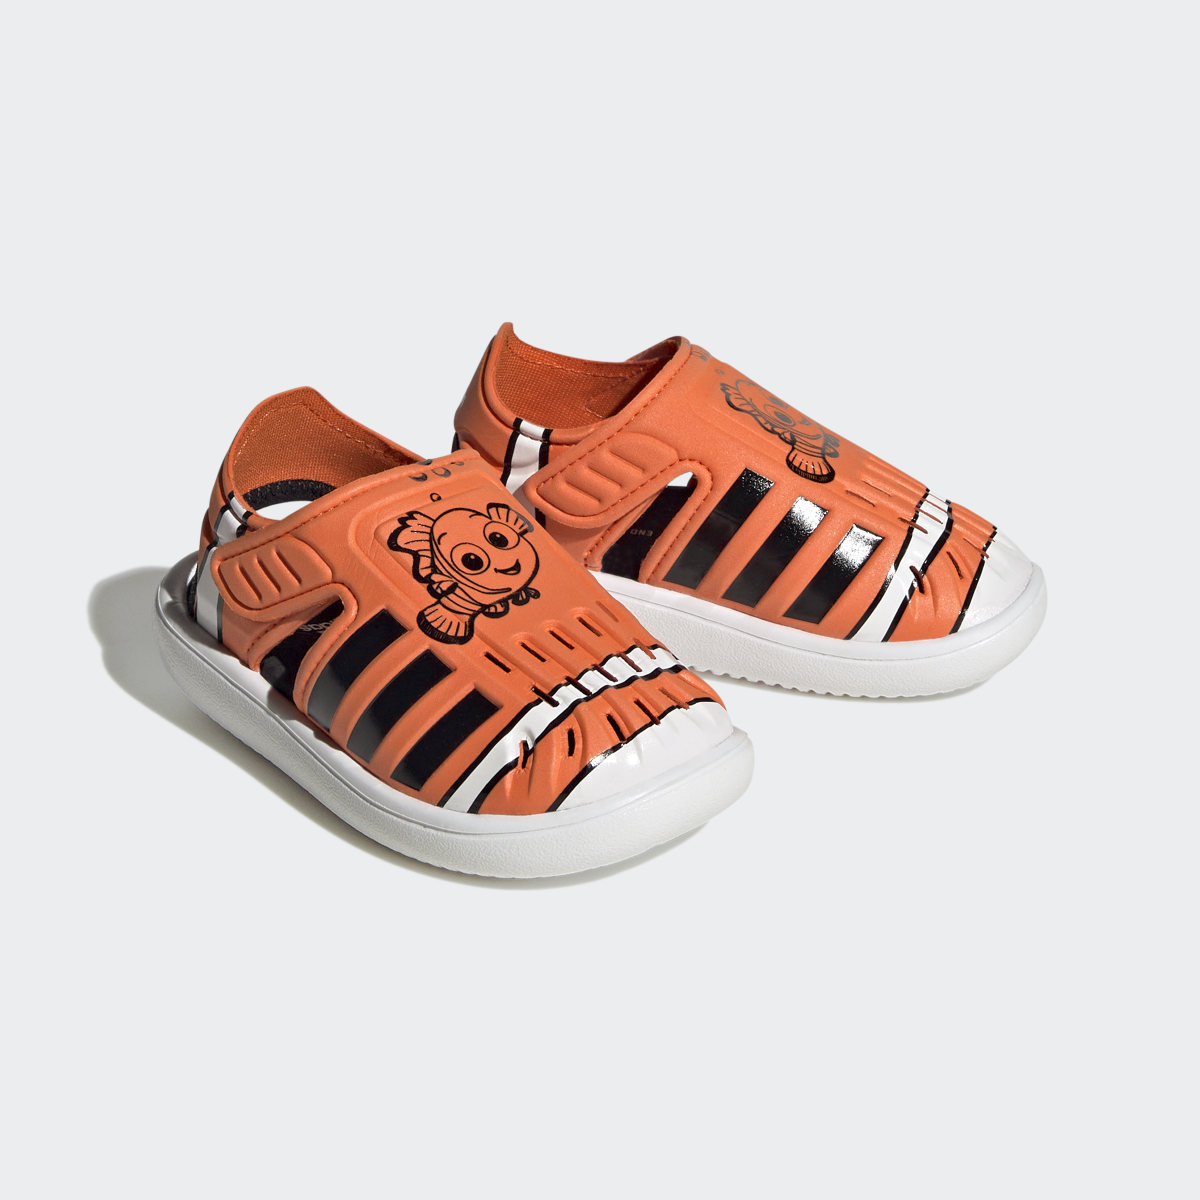 Adidas Finding Nemo Closed Toe Summer Sandals. 5